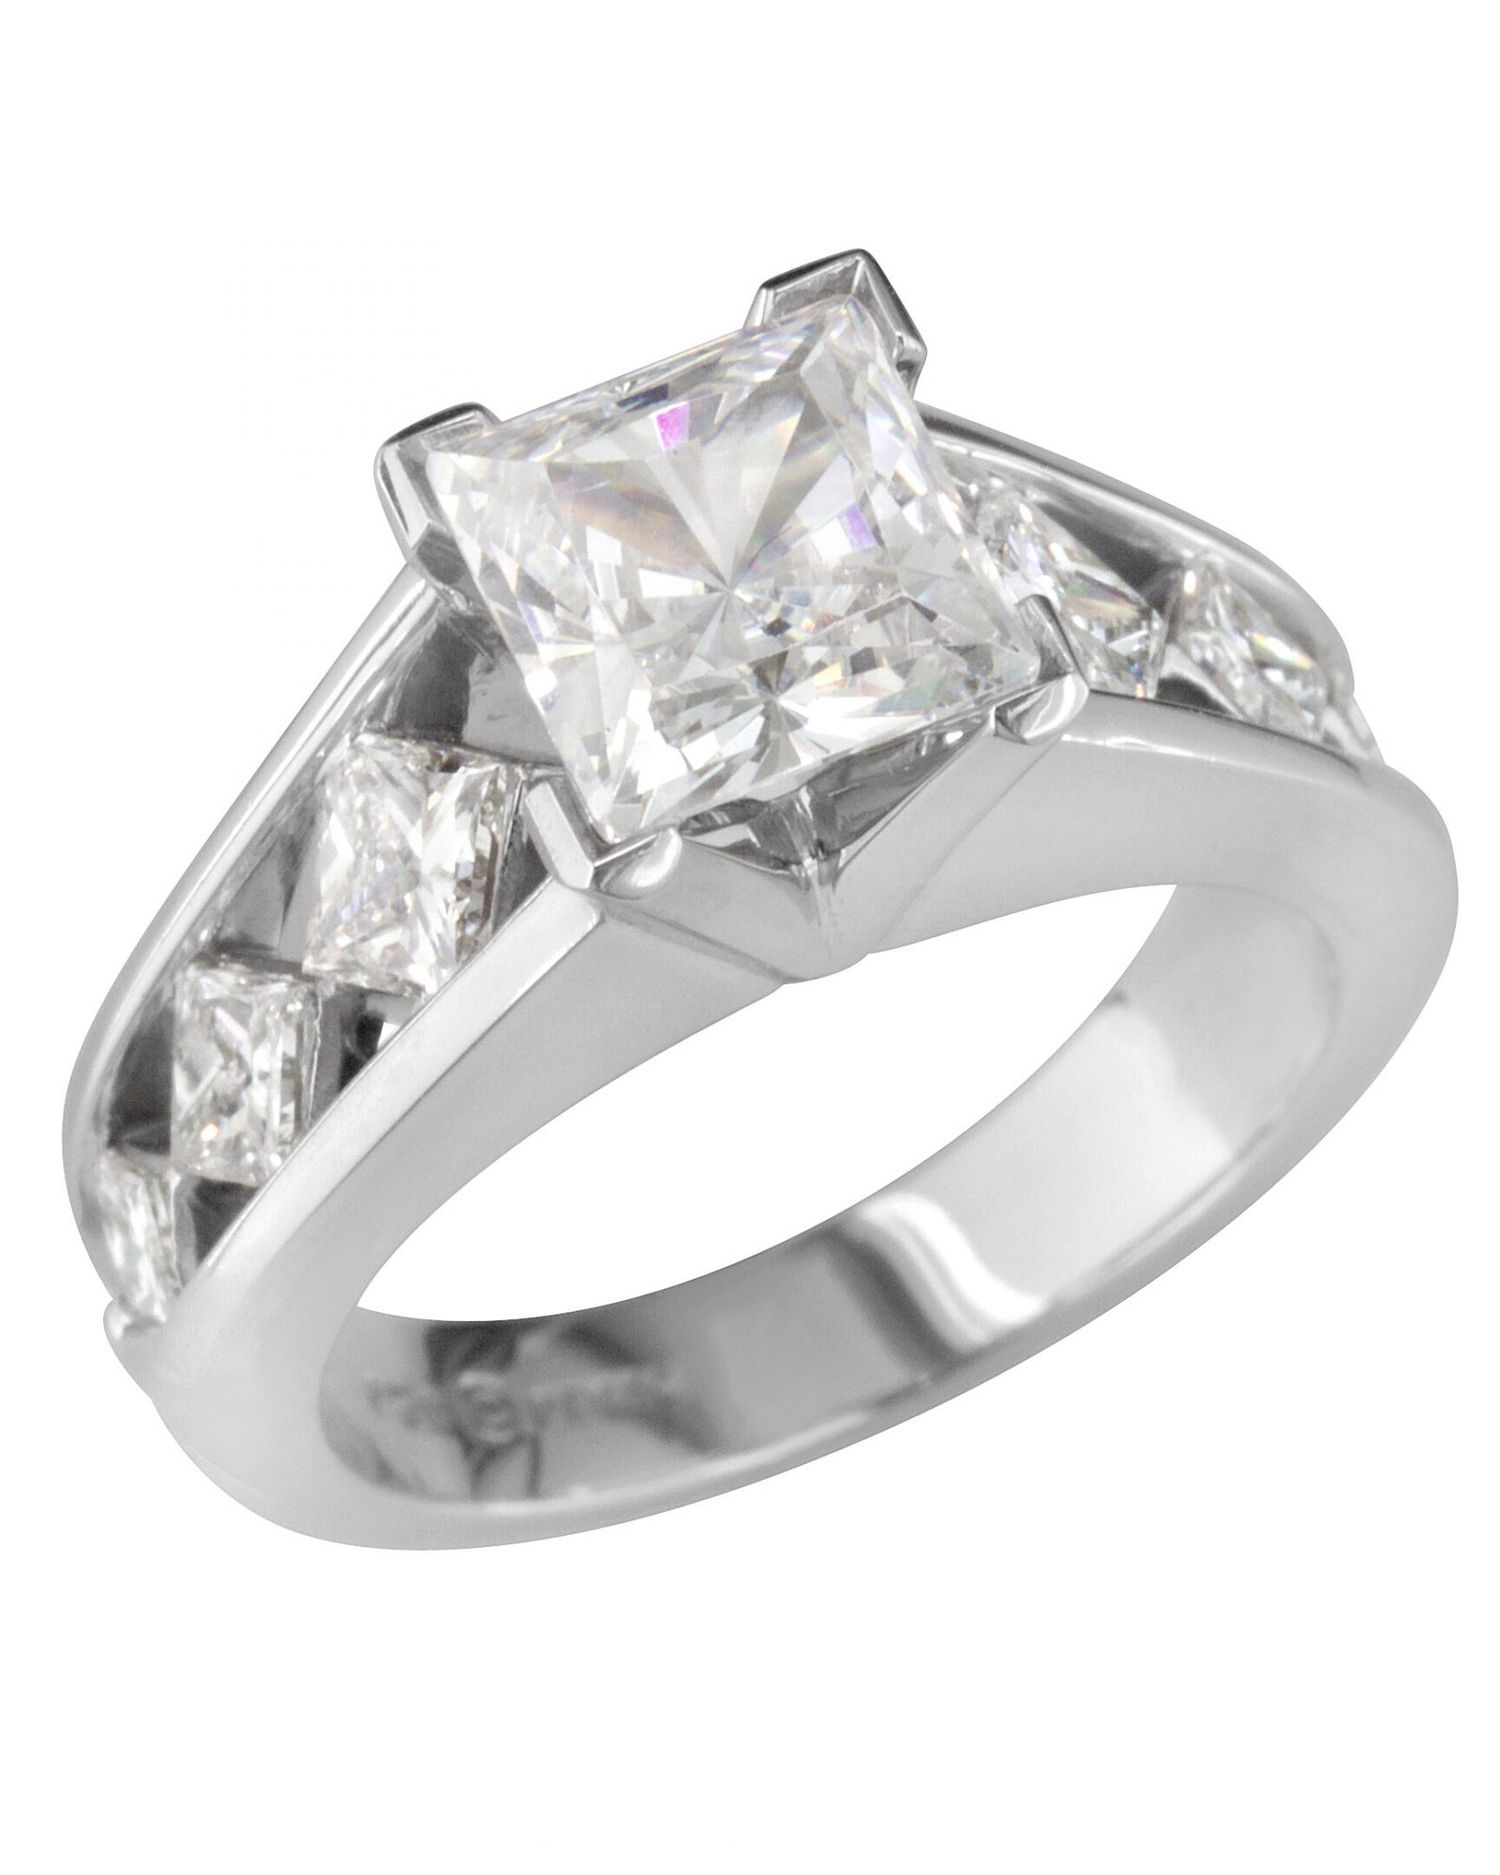 Princess-Cut Engagement Ring